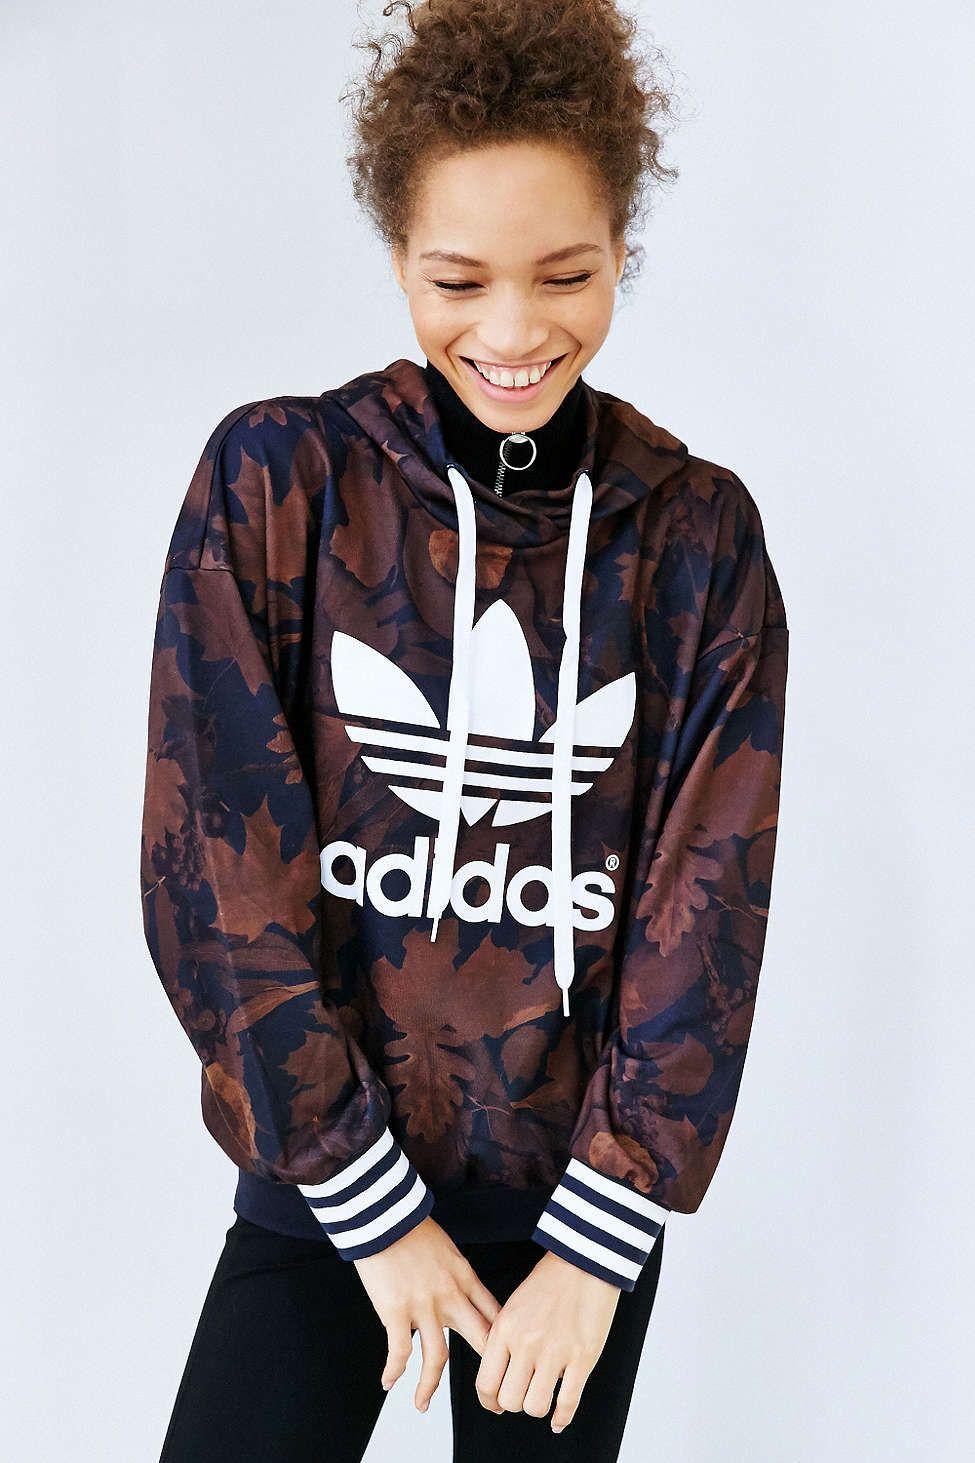 Adidas Leaf Camo Logo - adidas Originals Leaf Camo Hoodie Sweatshirt - Urban Outfitters ...